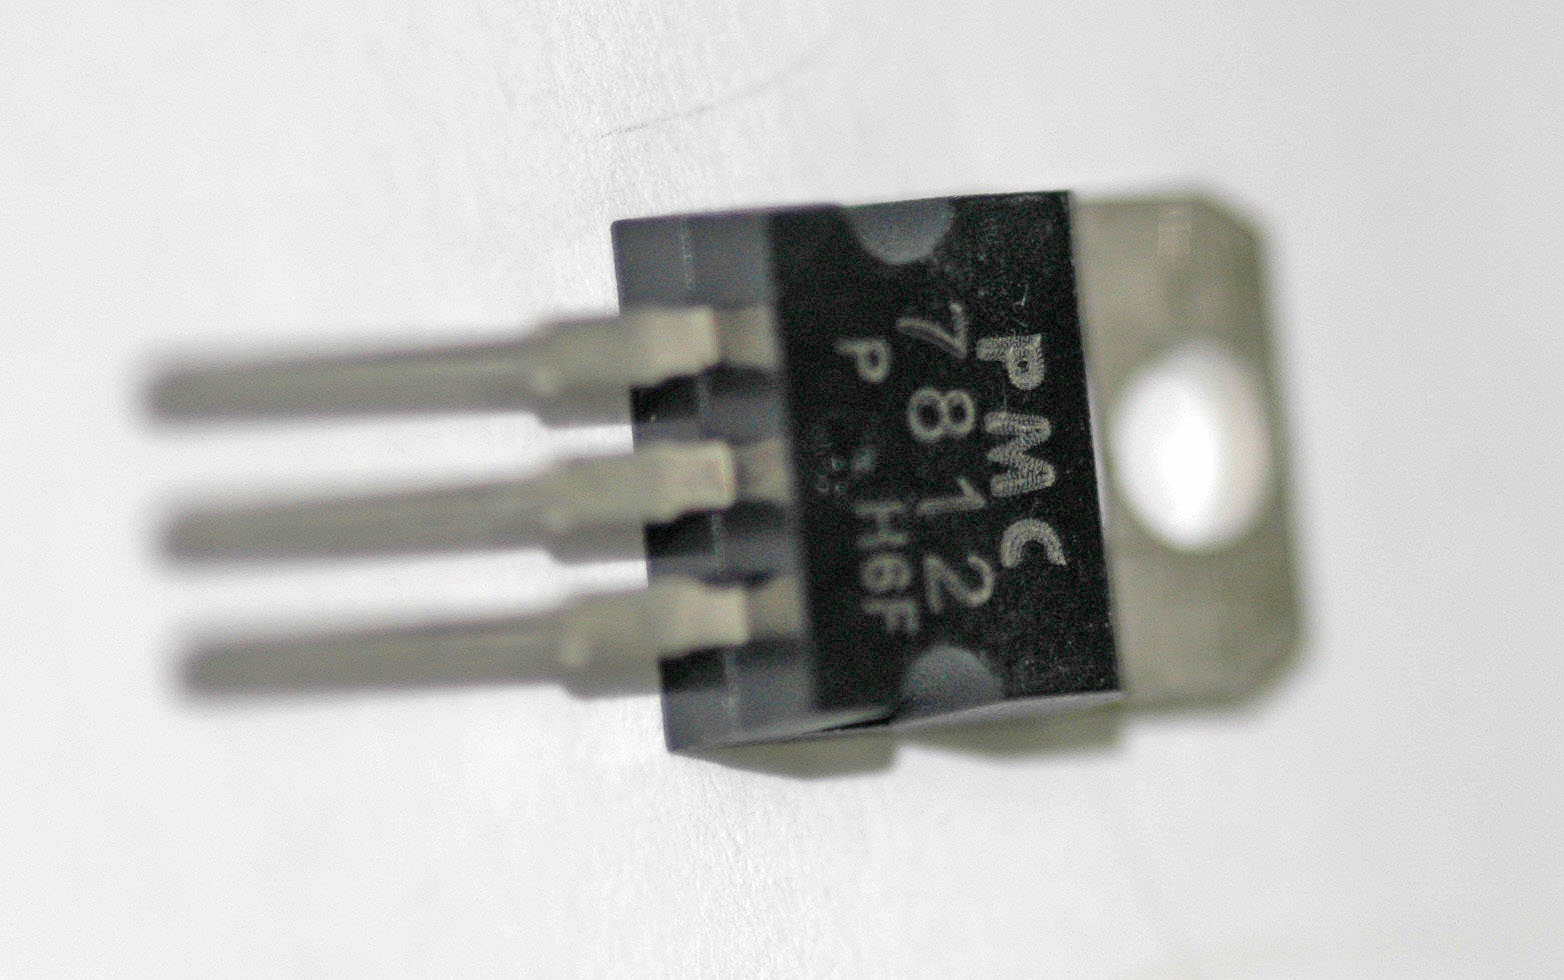 An integrated circuit voltage regulator